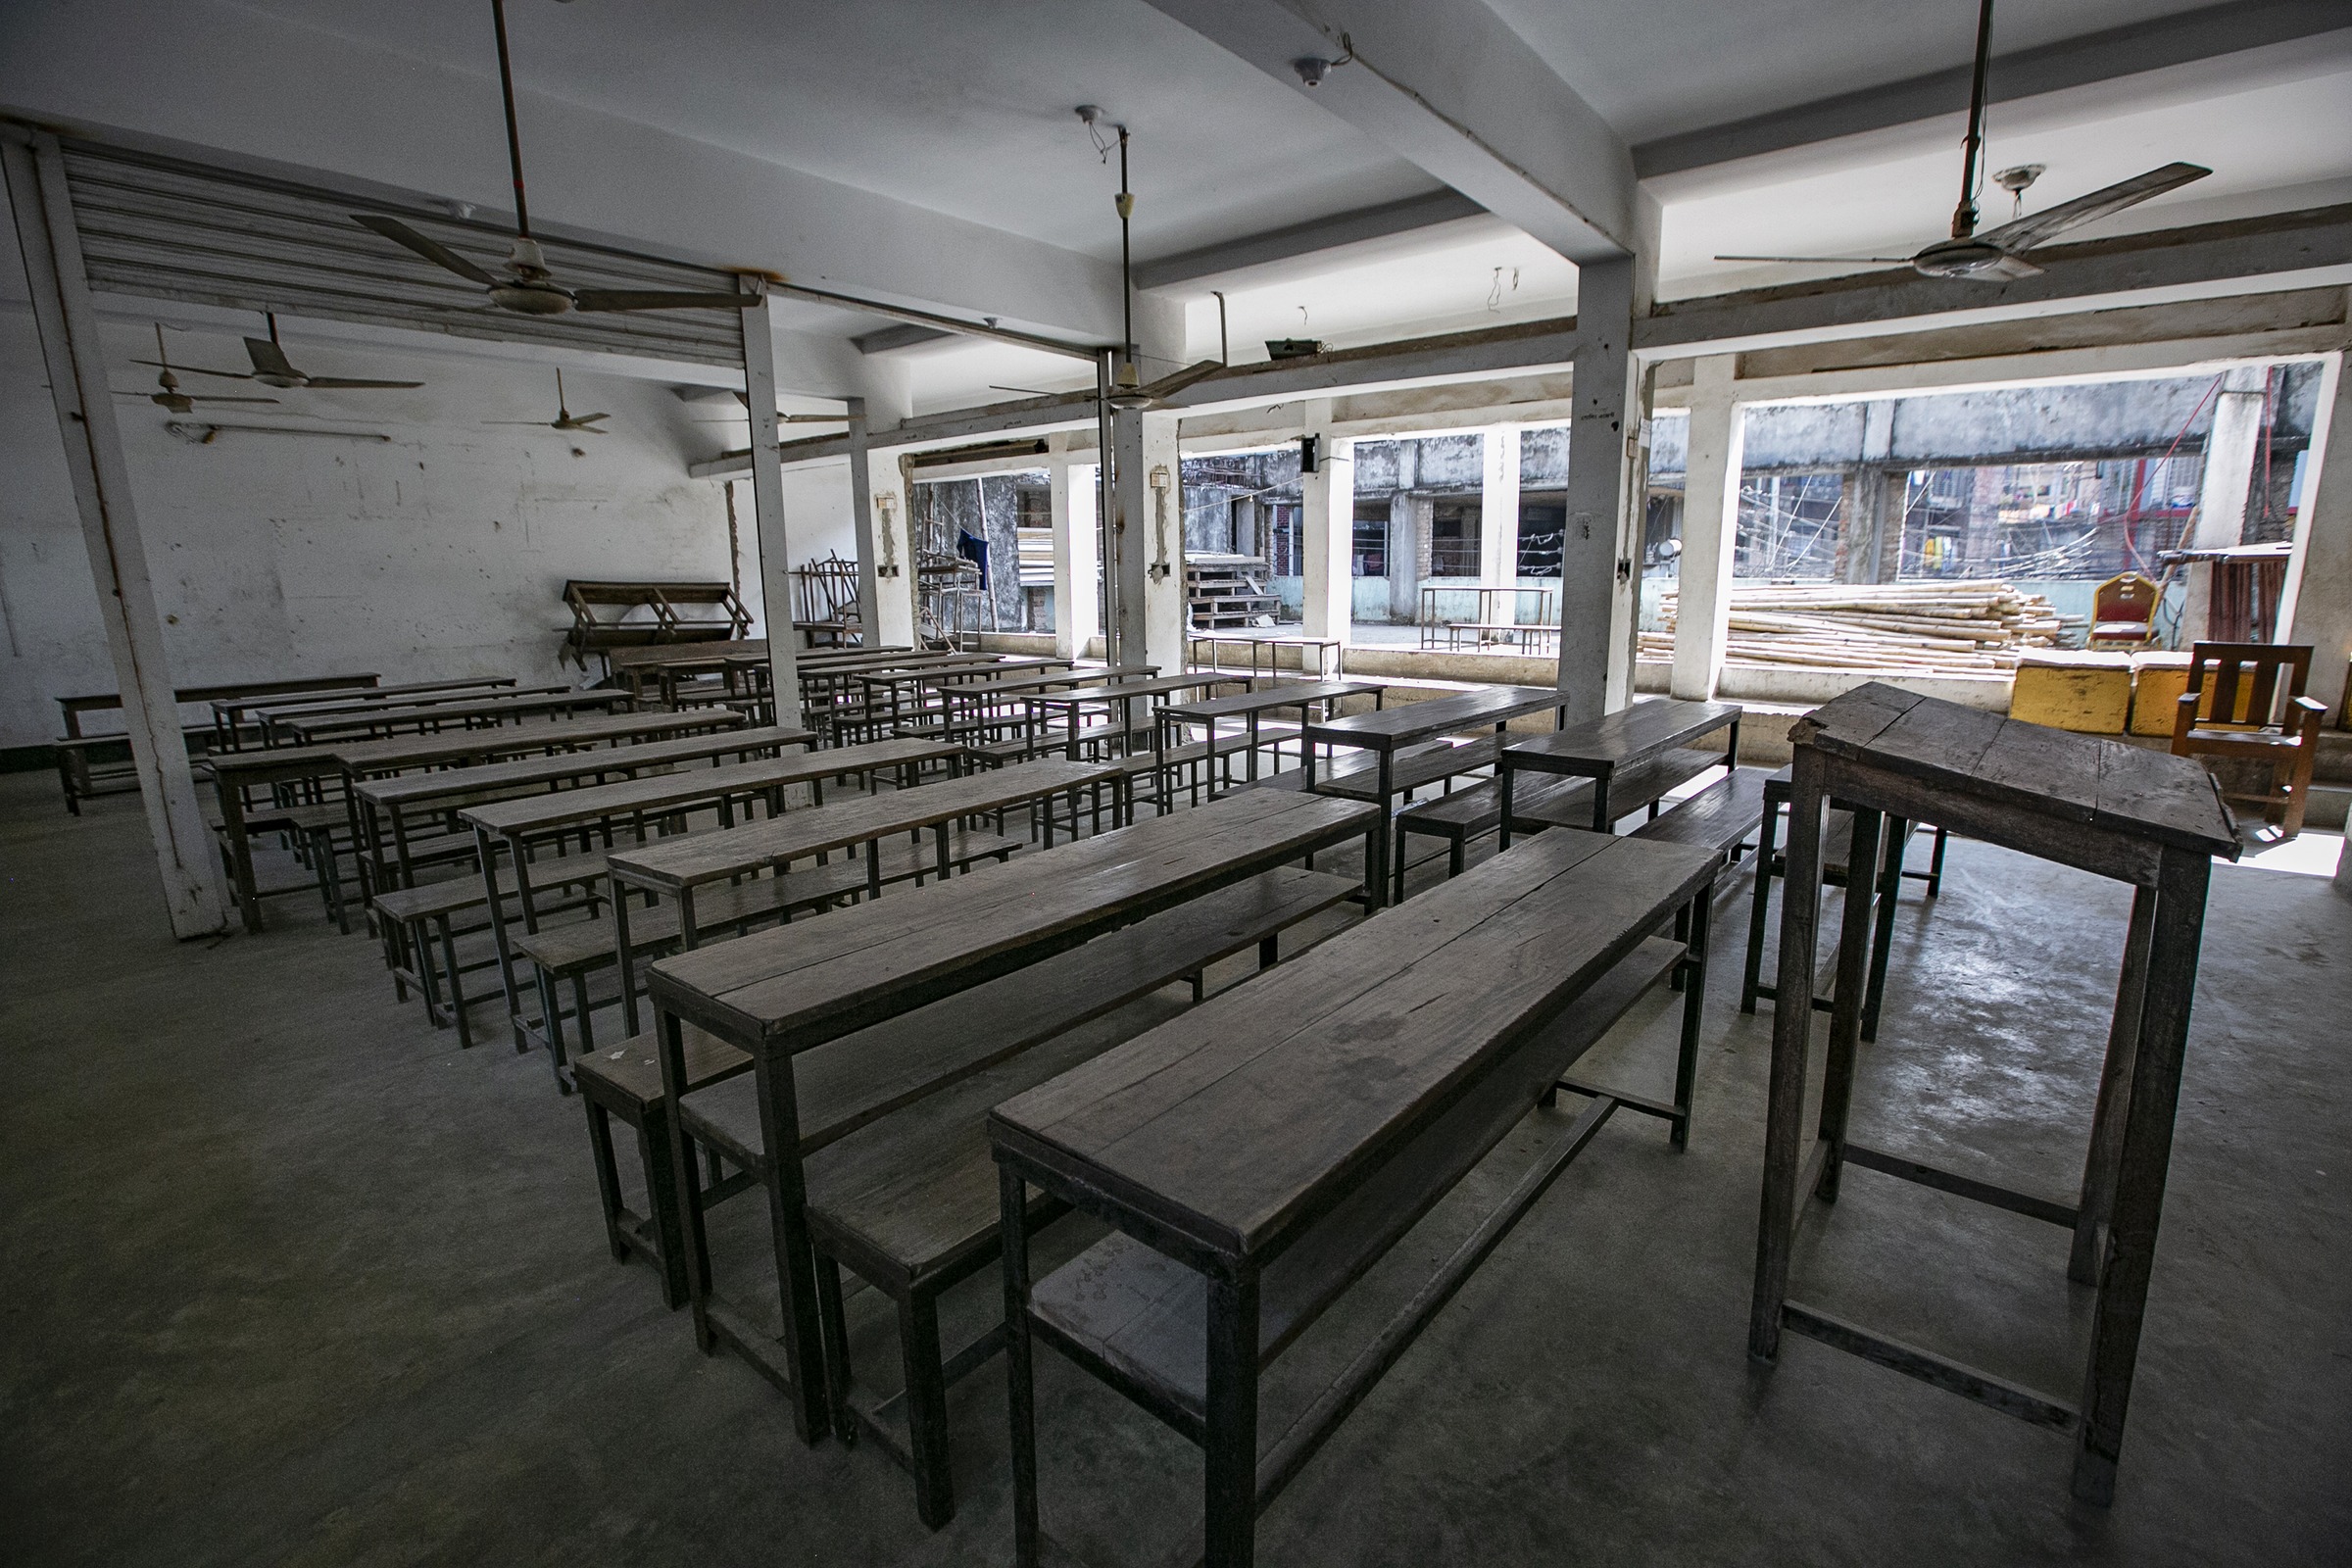 Bangladesh Longest School Closure